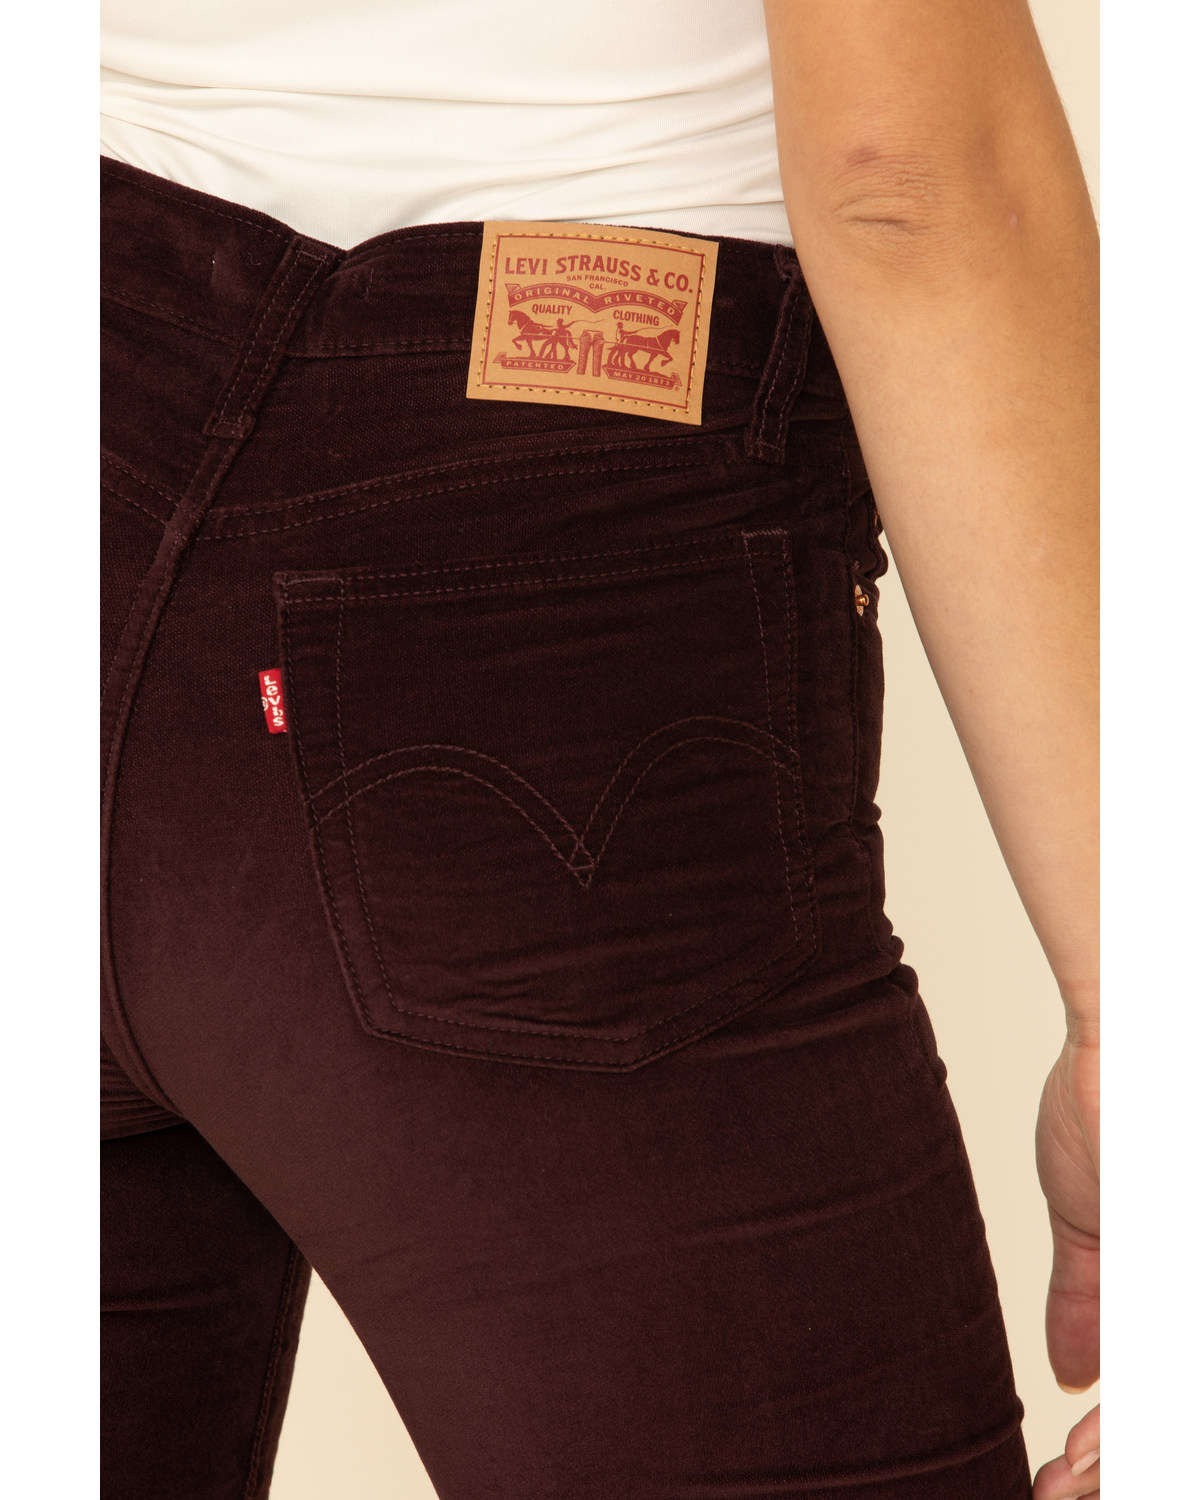 Levi's Women's Moleskin High Rise Wedgie Skinny Jeans Burgundy 26W x 27L - image 5 of 6